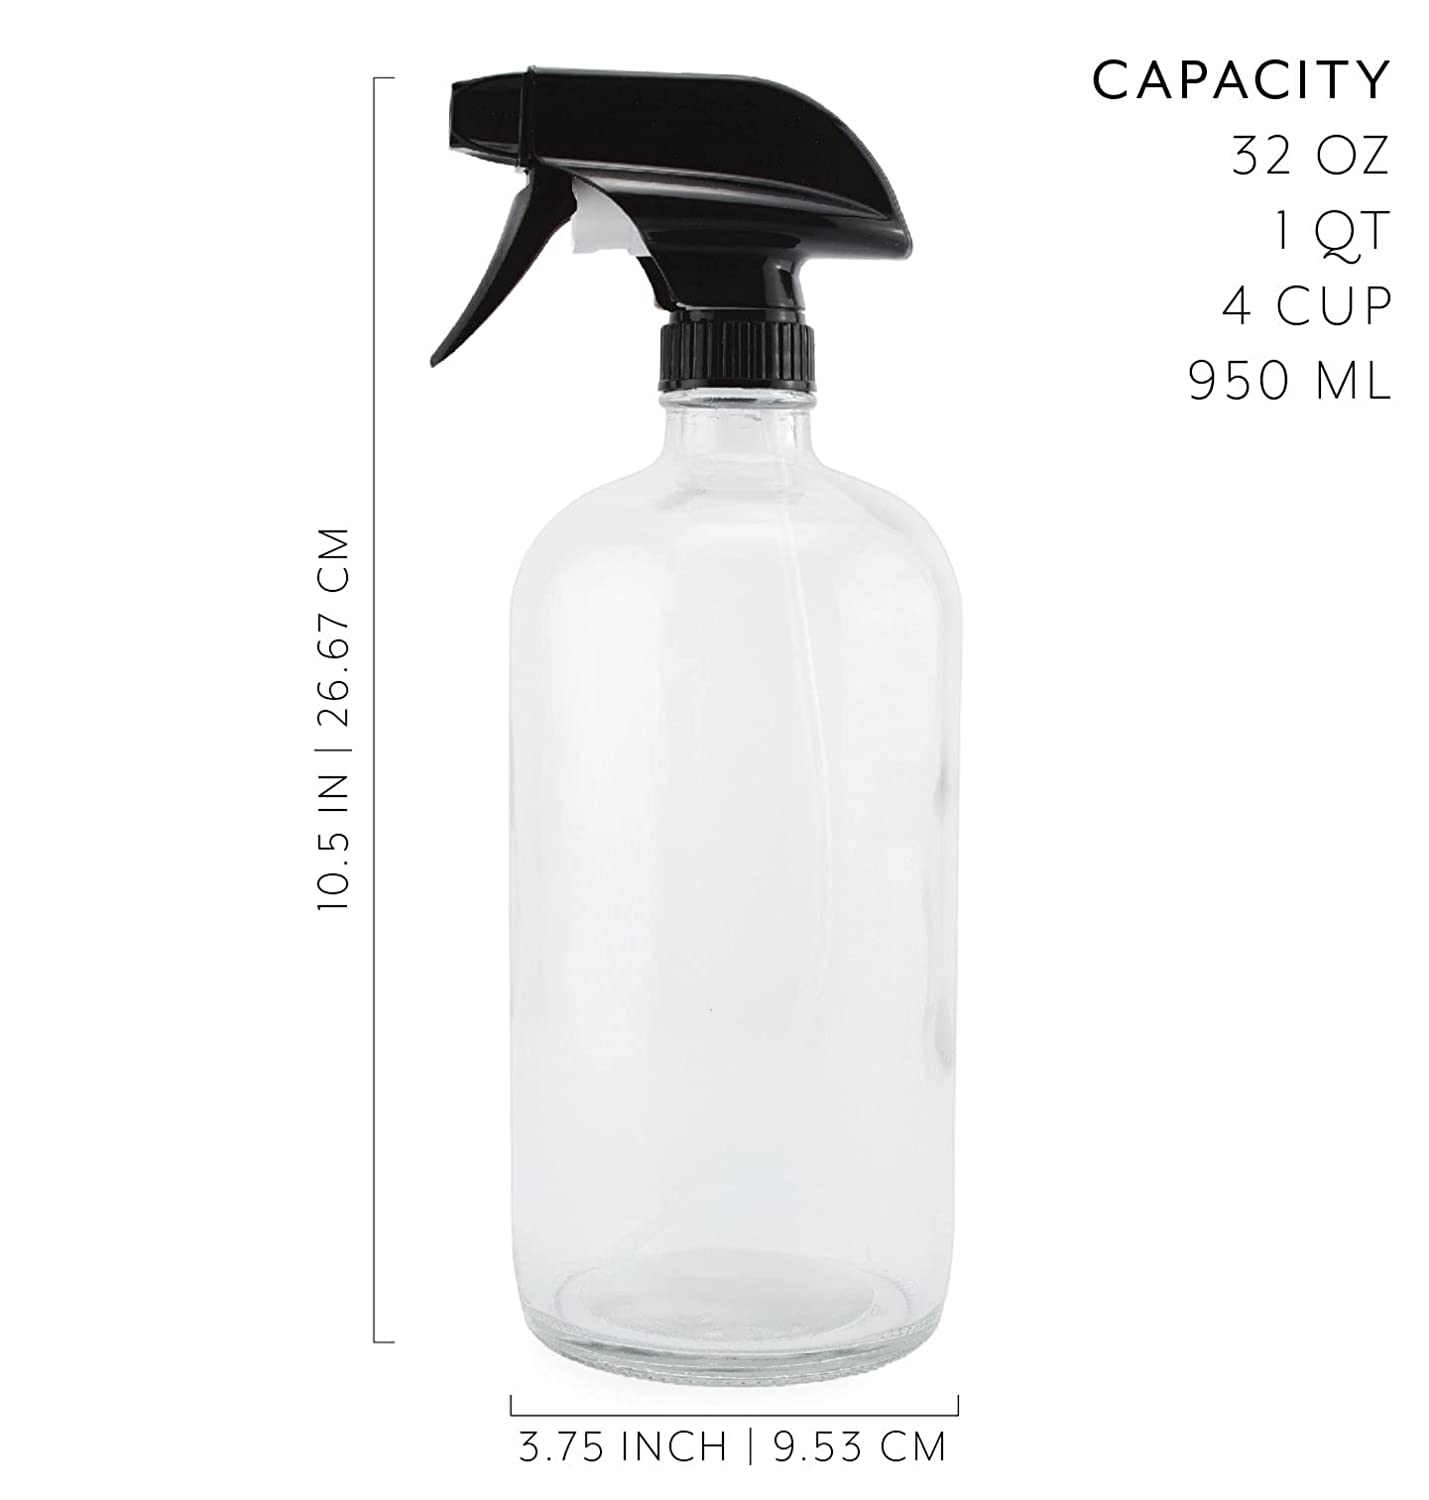 32oz Glass Spray Bottles (2-Pack, Clear) - sh1784cl32oz